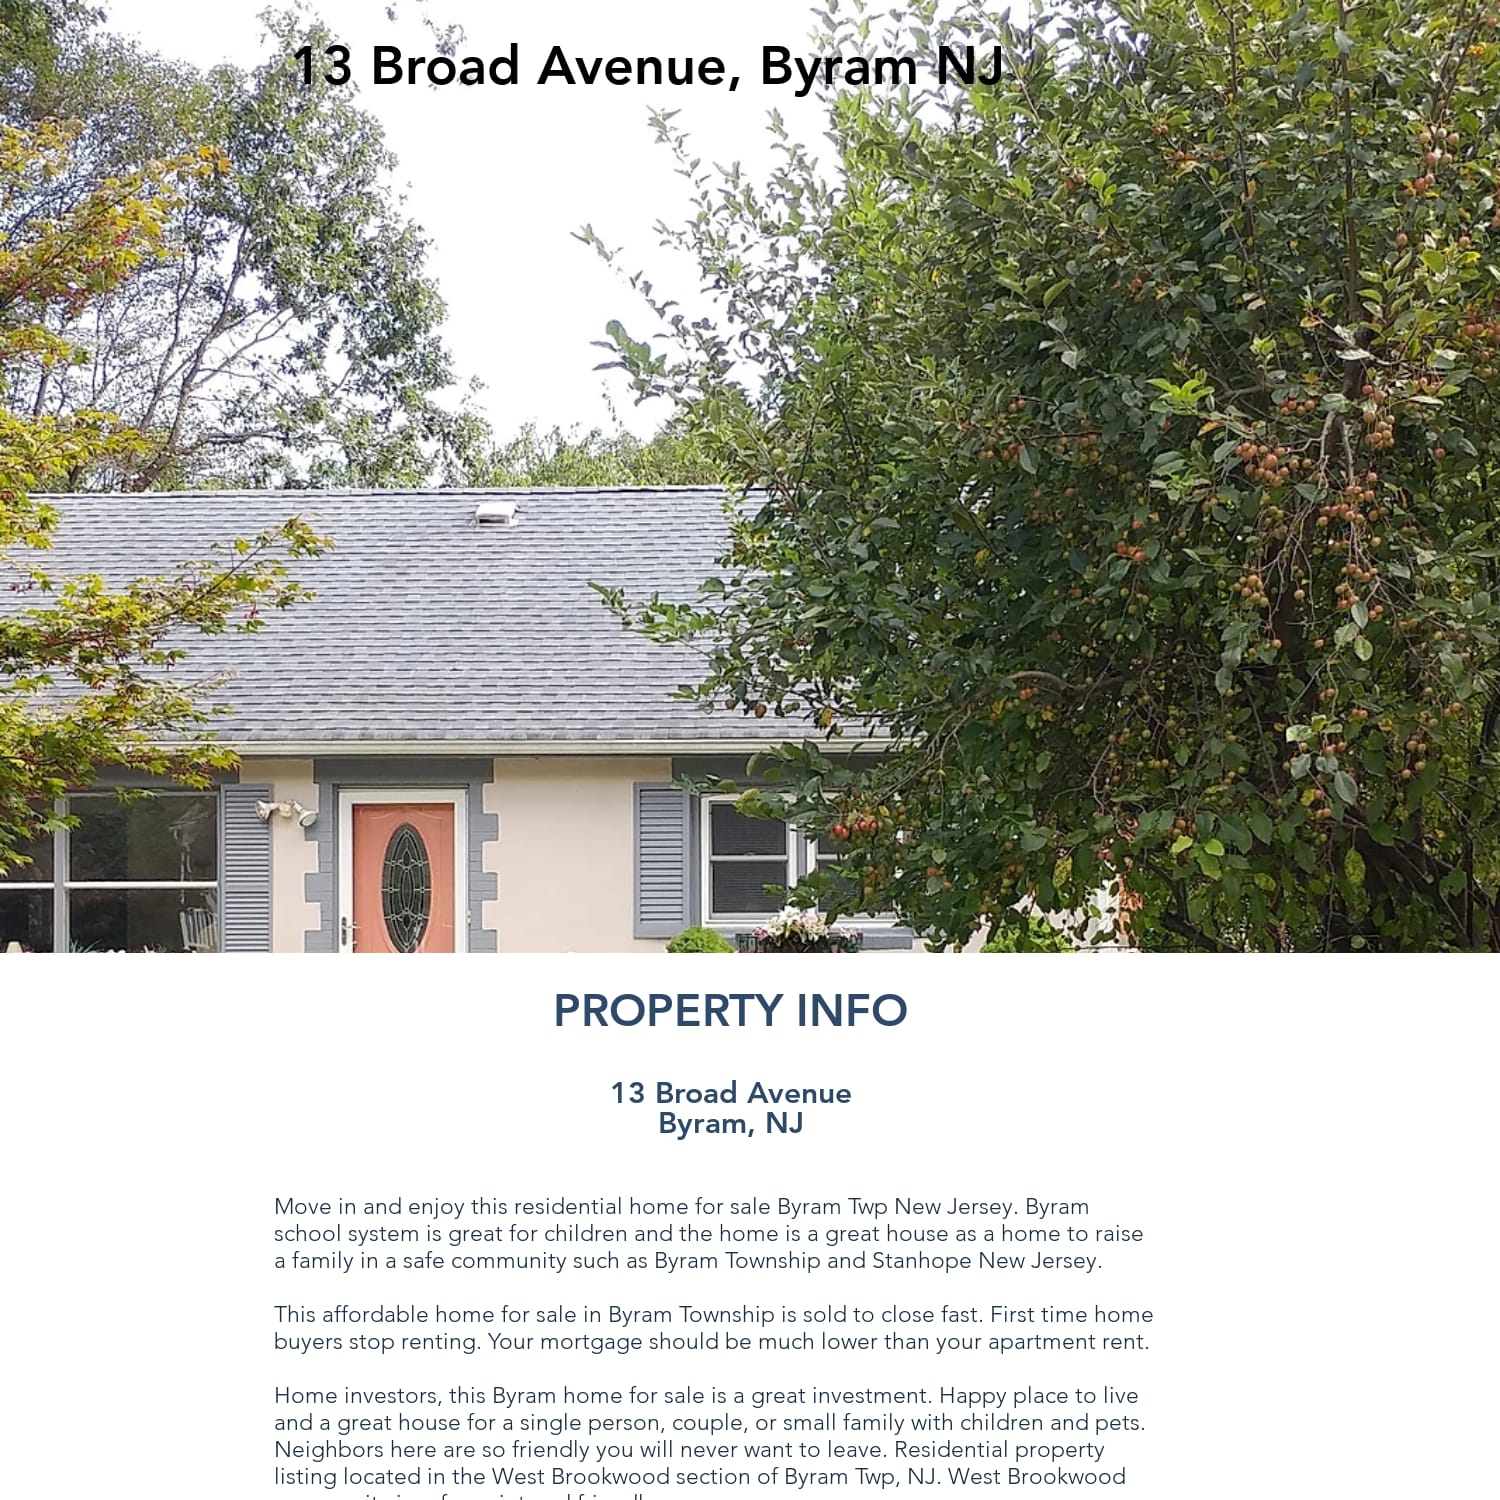 Byram Homes Properties For Sale Byram TWP, NJ